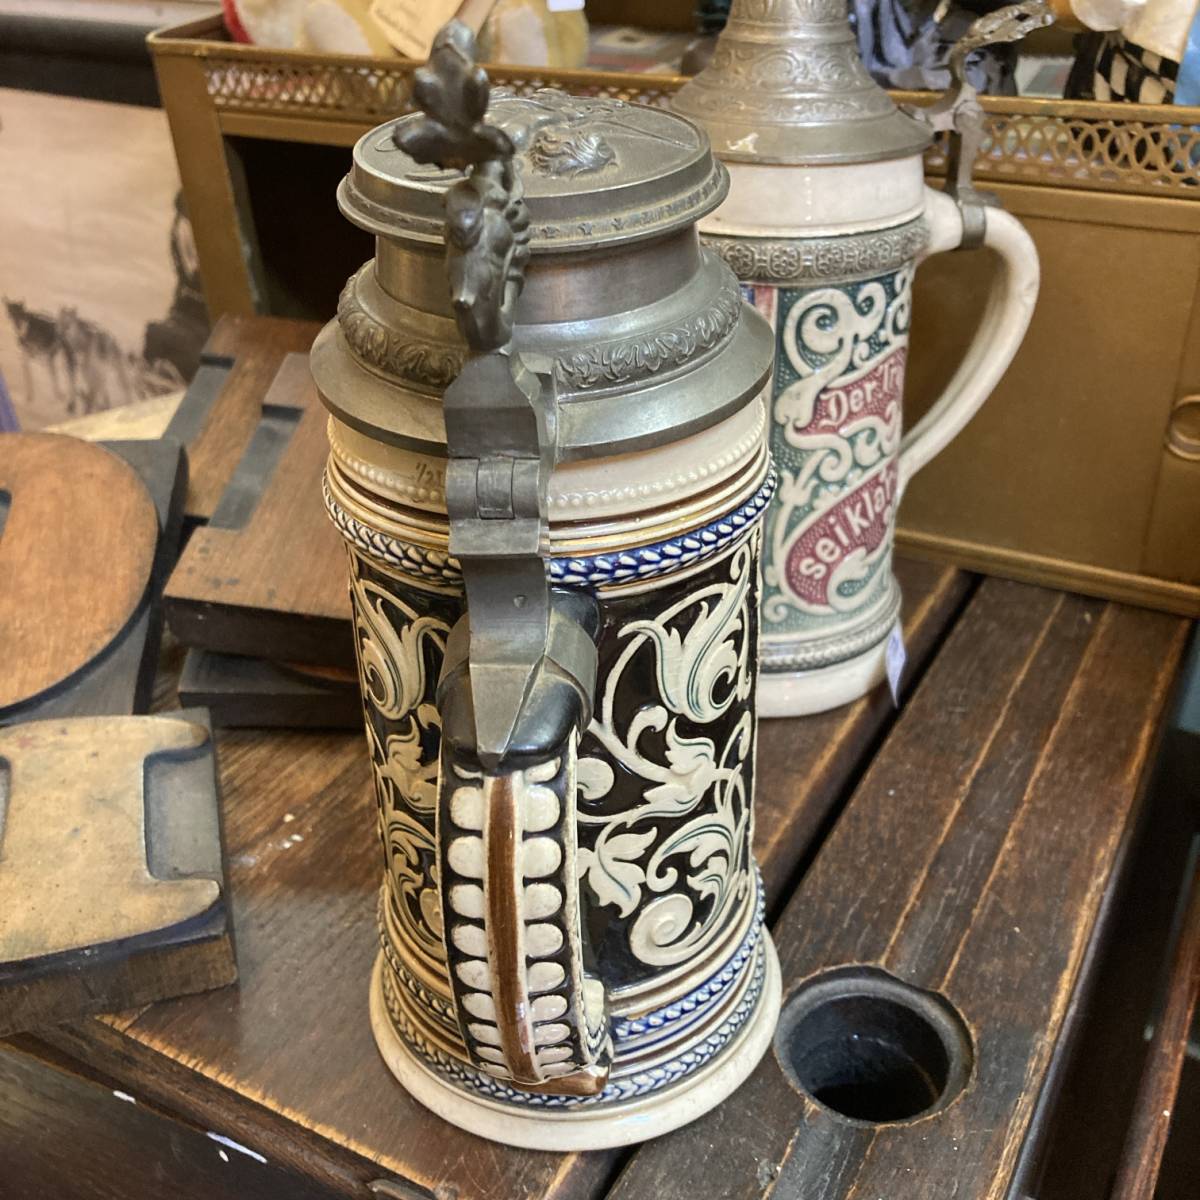  Vintage * Germany made ceramics made Via mug * retro, that time thing, beer, beautiful goods, beer mug 